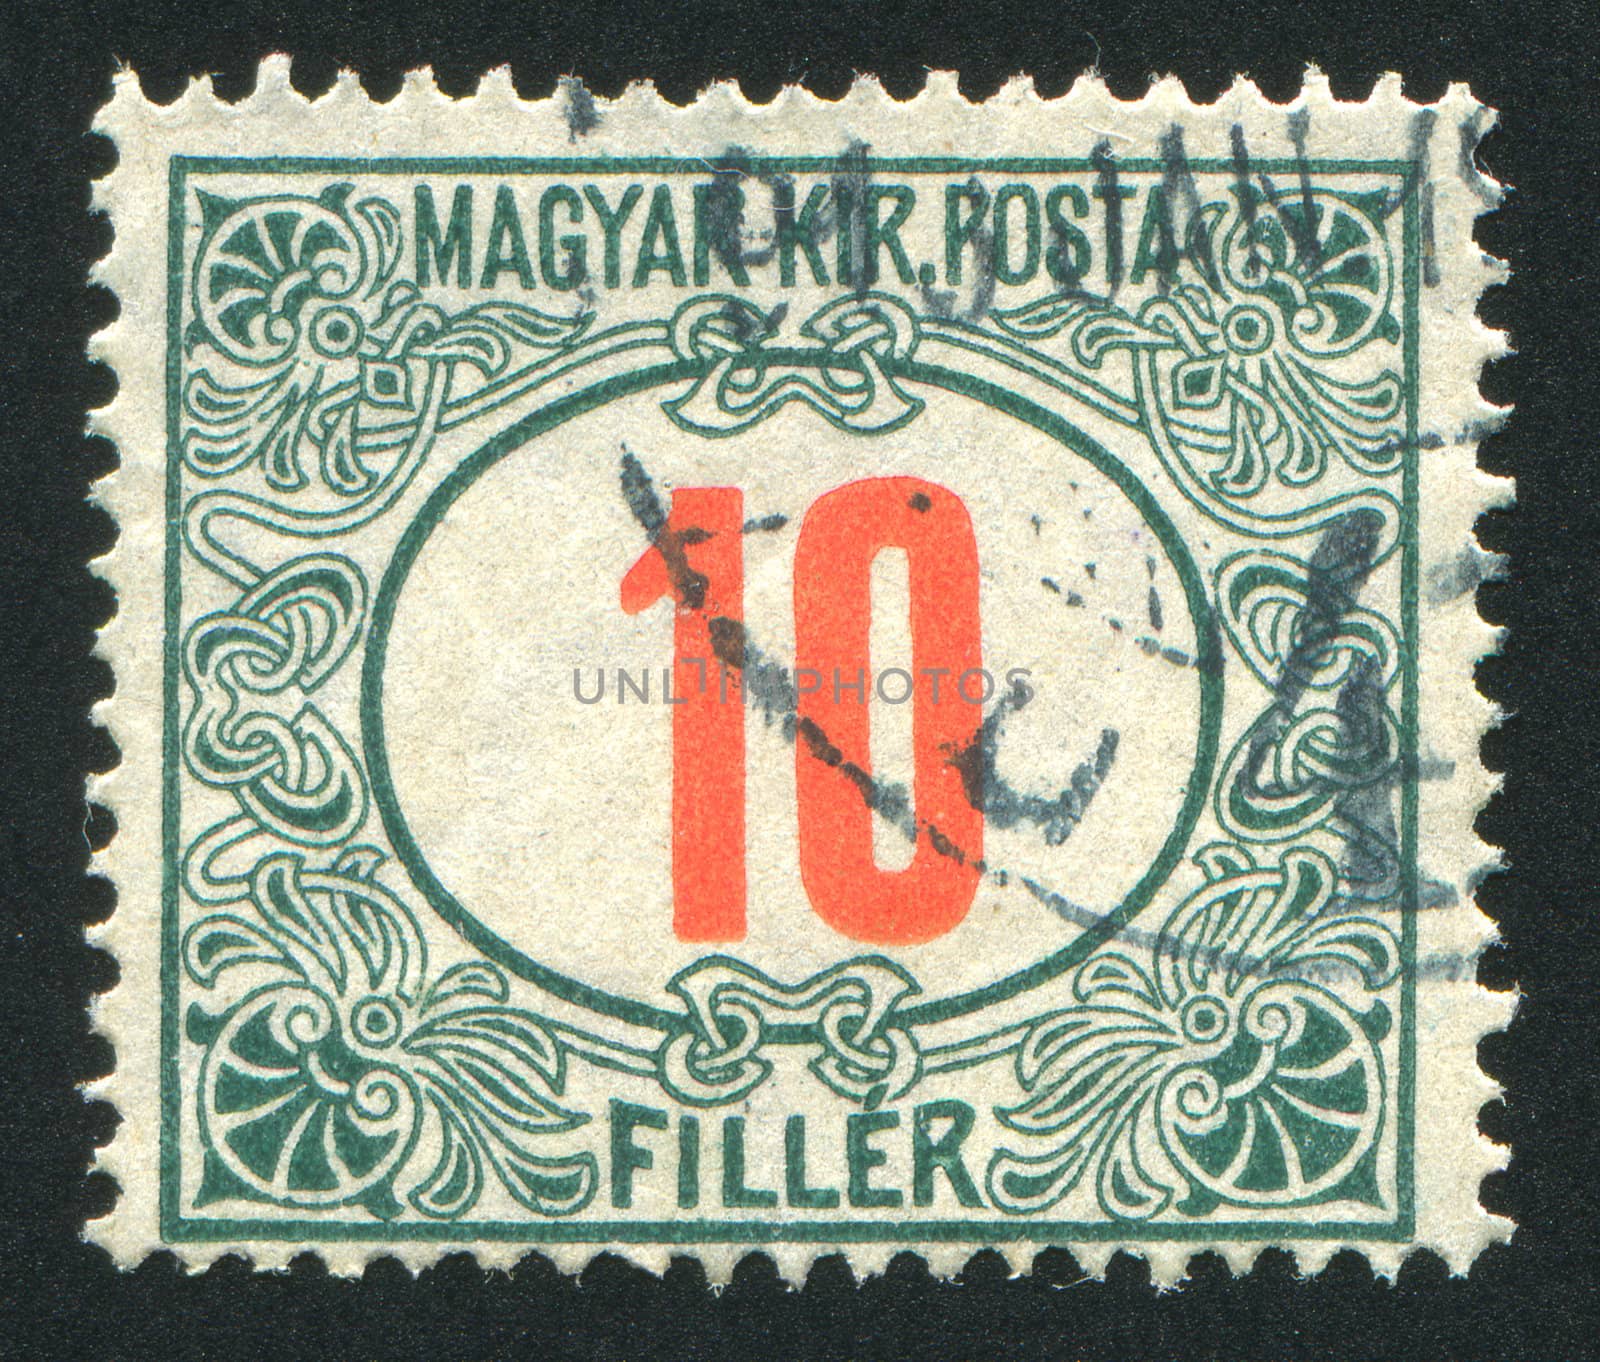 HUNGARY - CIRCA 1919: stamp printed by Hungary, shows pattern, circa 1919